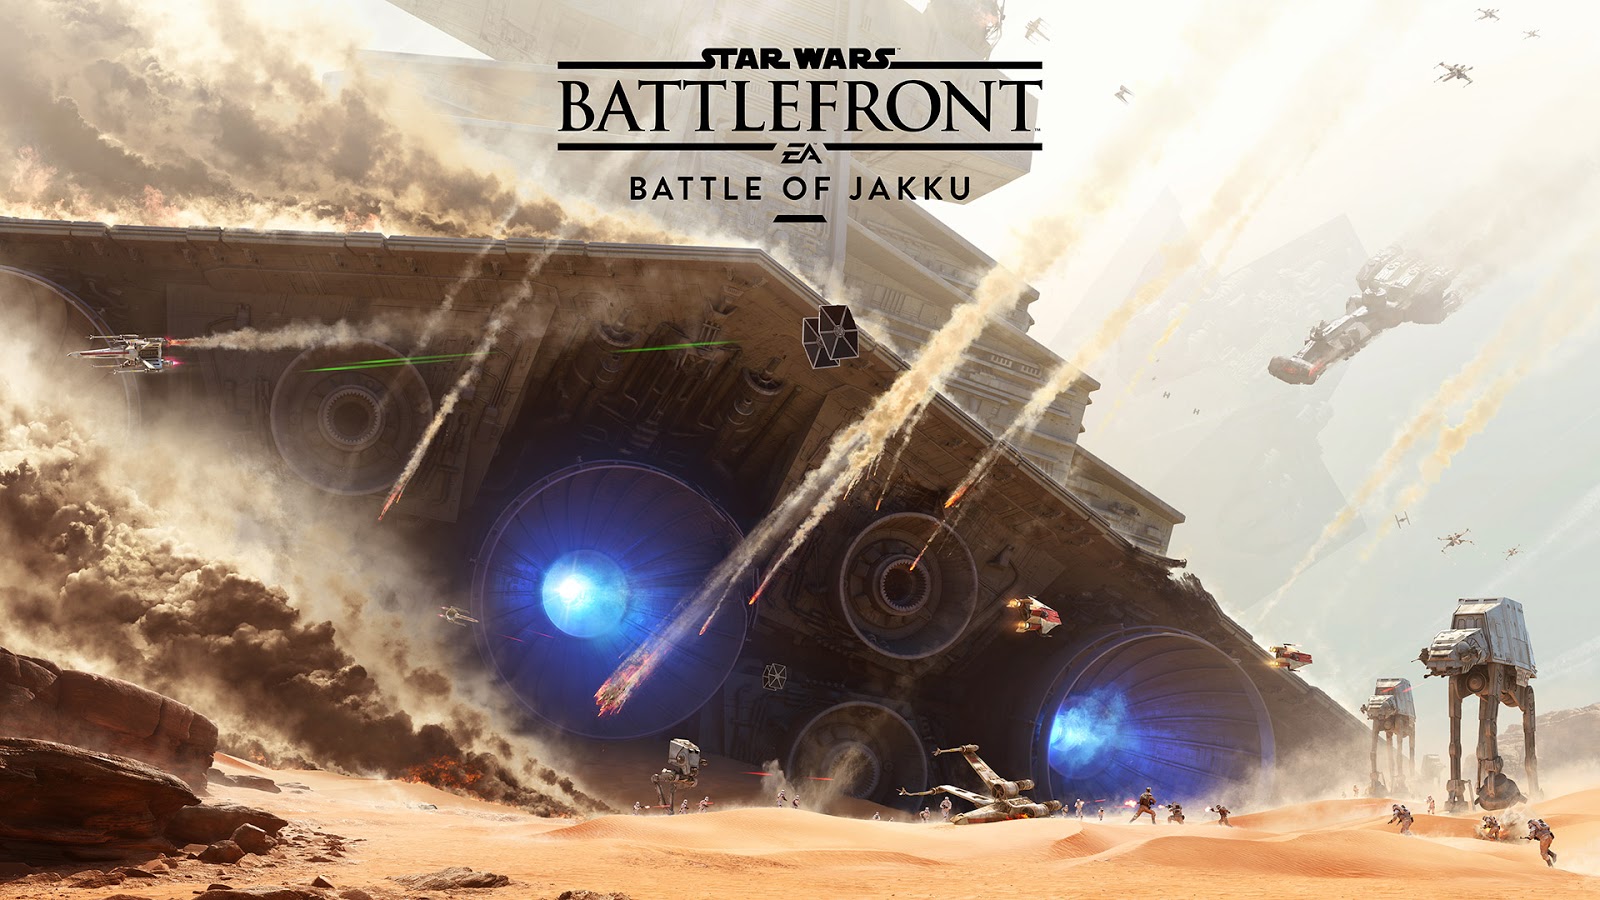 DICE detalha o DLC Battle of Jakku para Star Wars: Battlefront